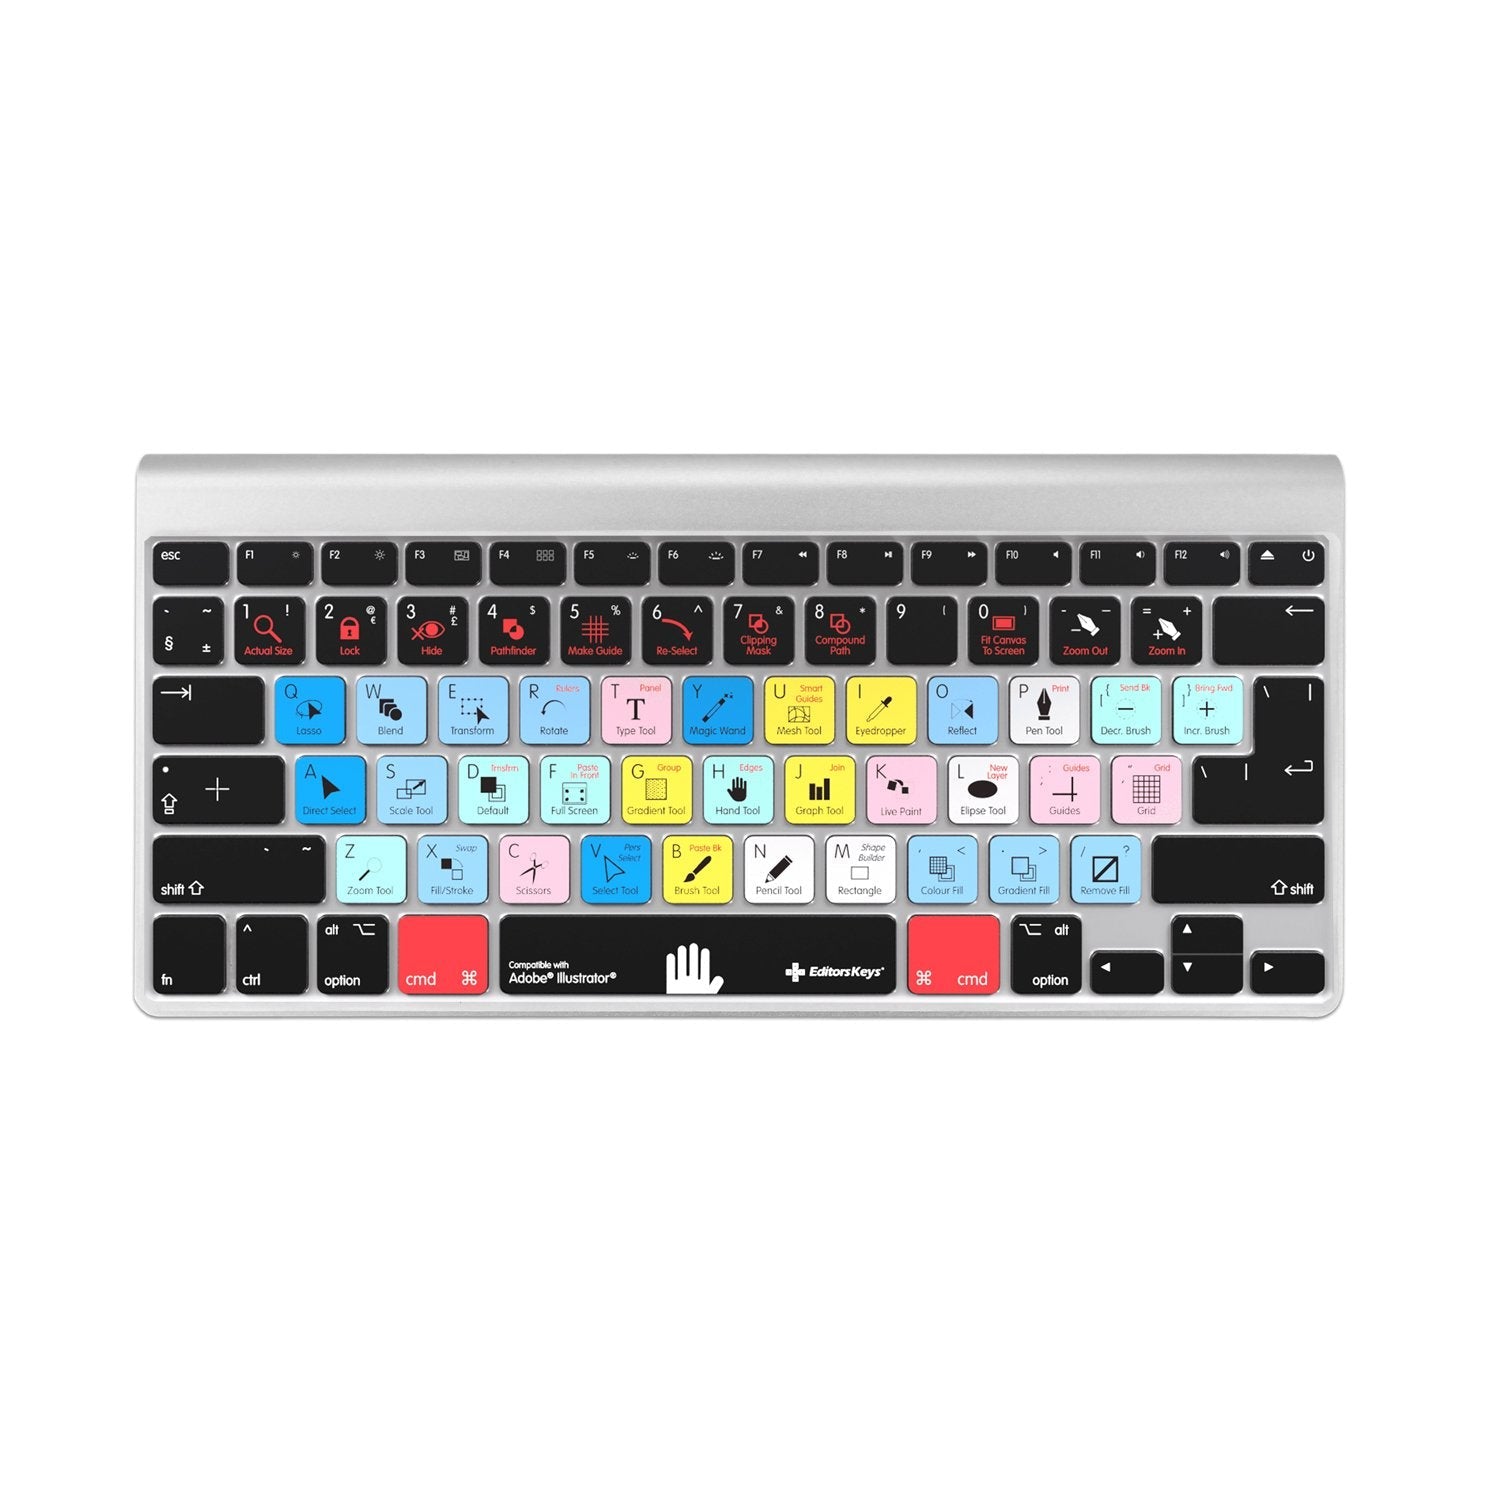 Adobe Illustrator Keyboard Covers for MacBook and iMac - Editors Keys